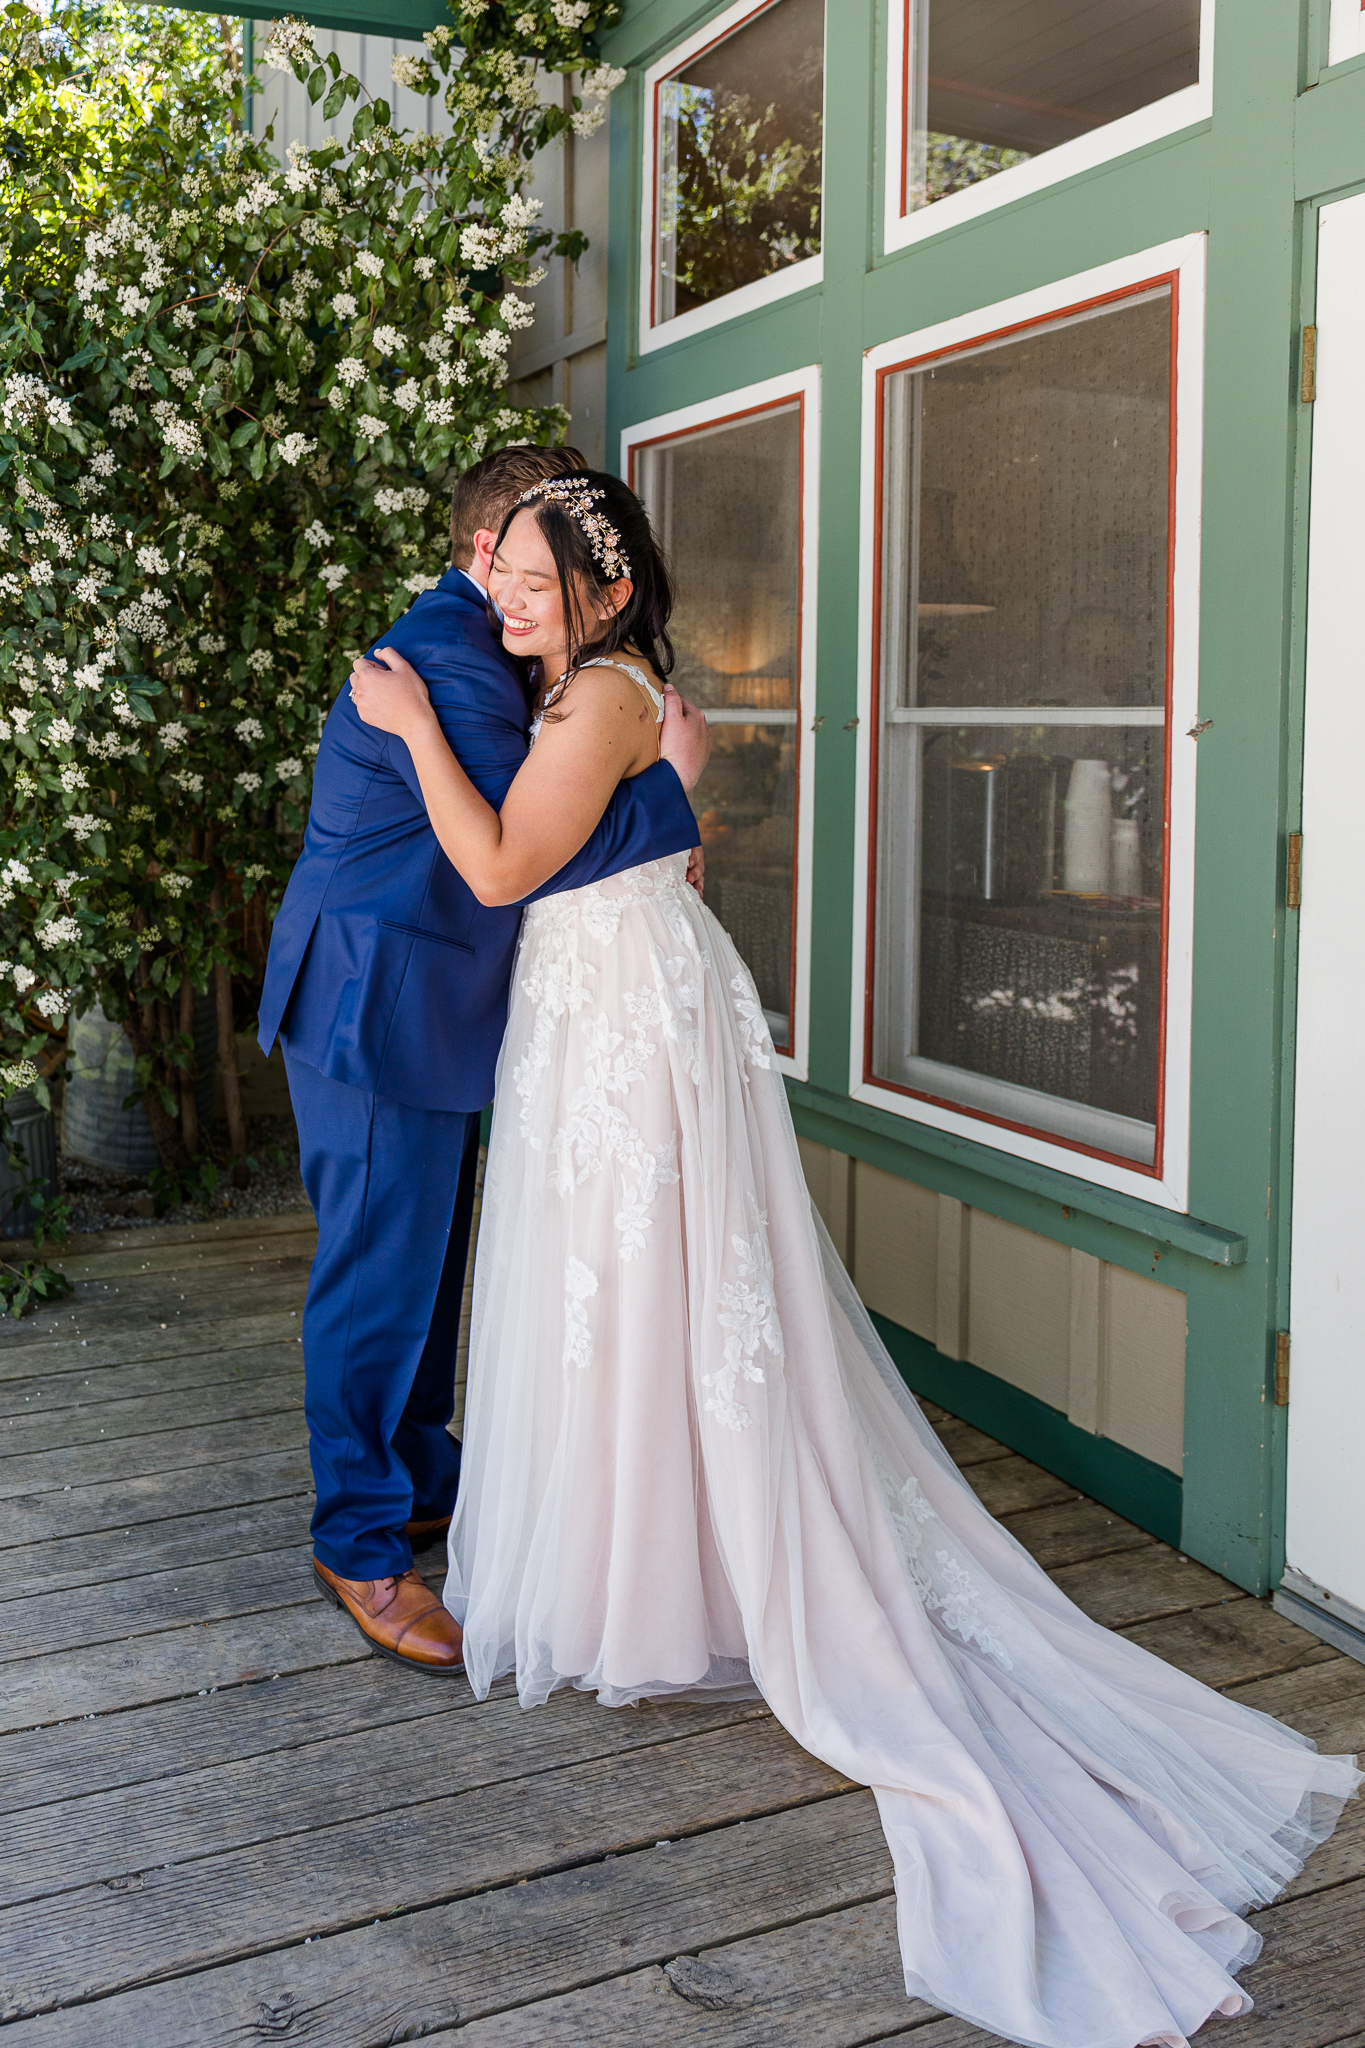 Wedding at Oakwood Creek in Julian captured by Carlsbad Photo